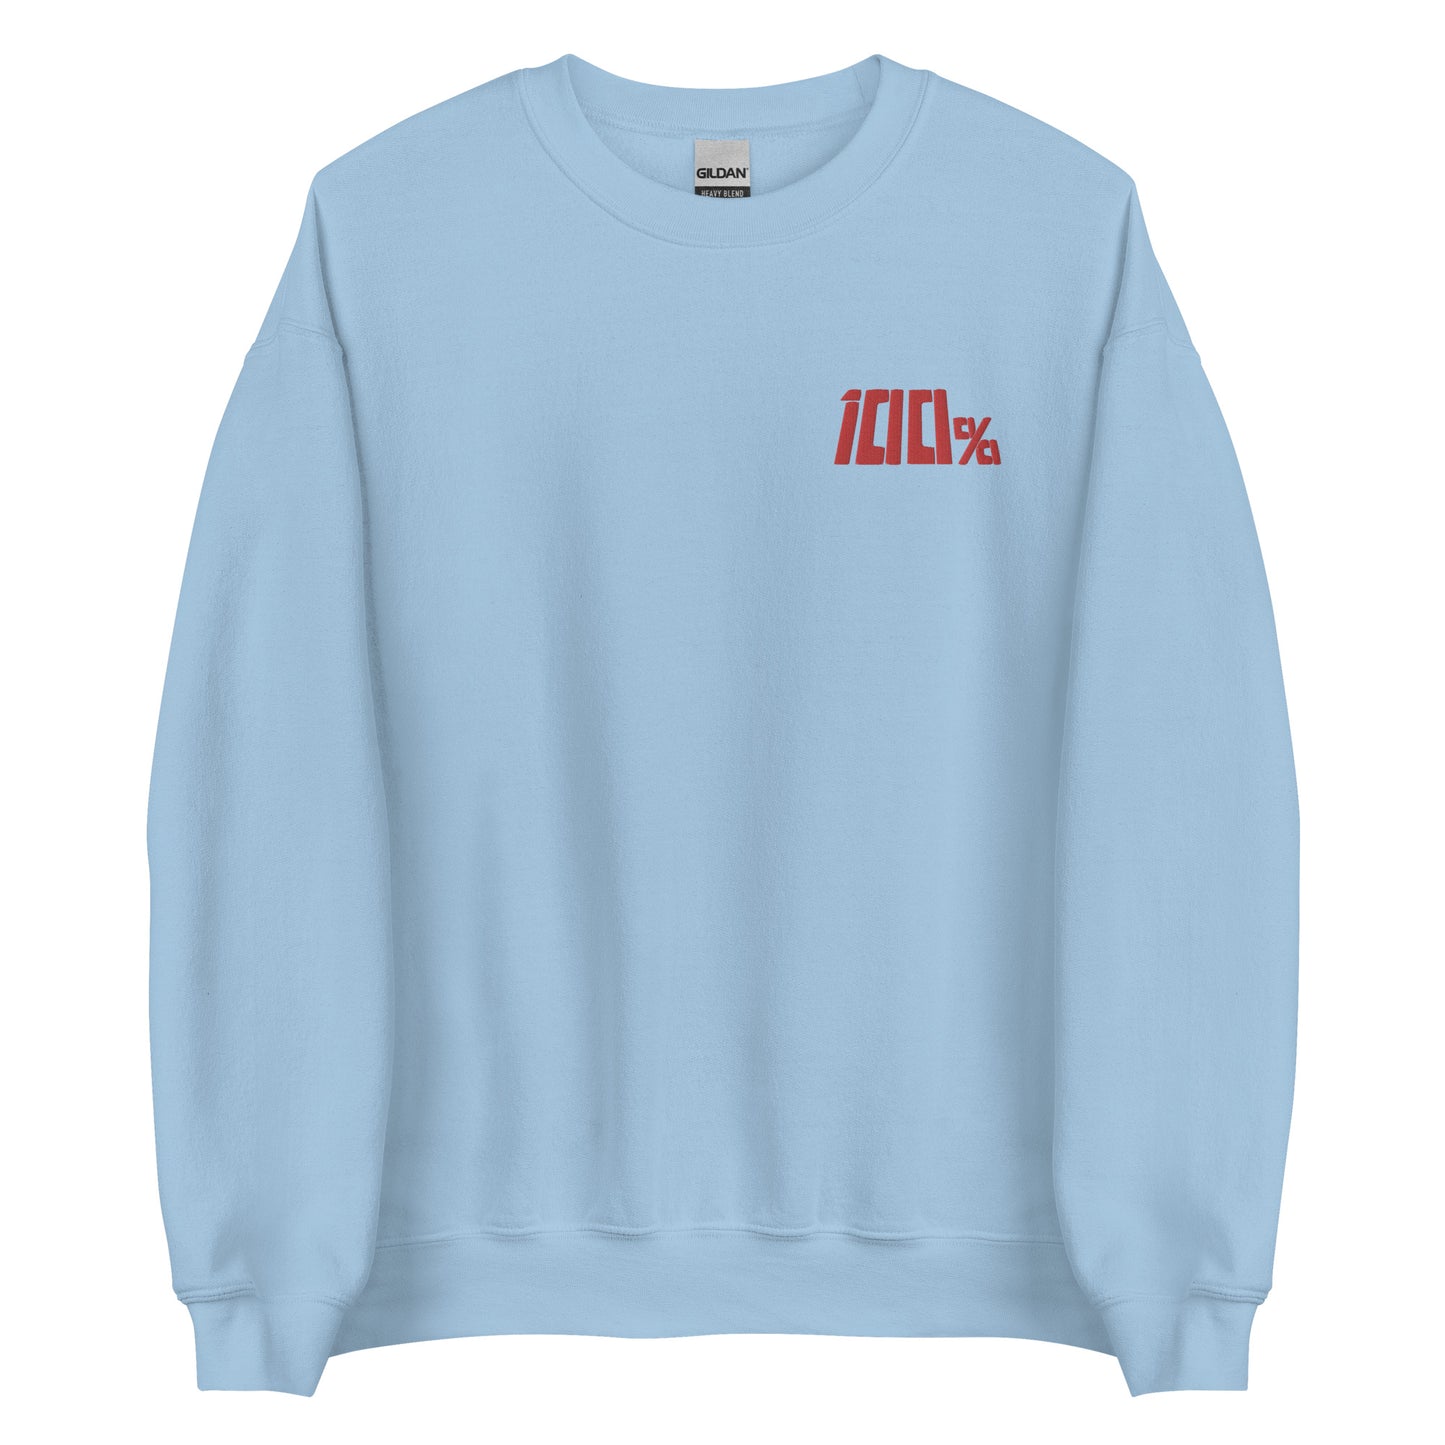 MP 100% Inspired embroidered crew neck Sweatshirt